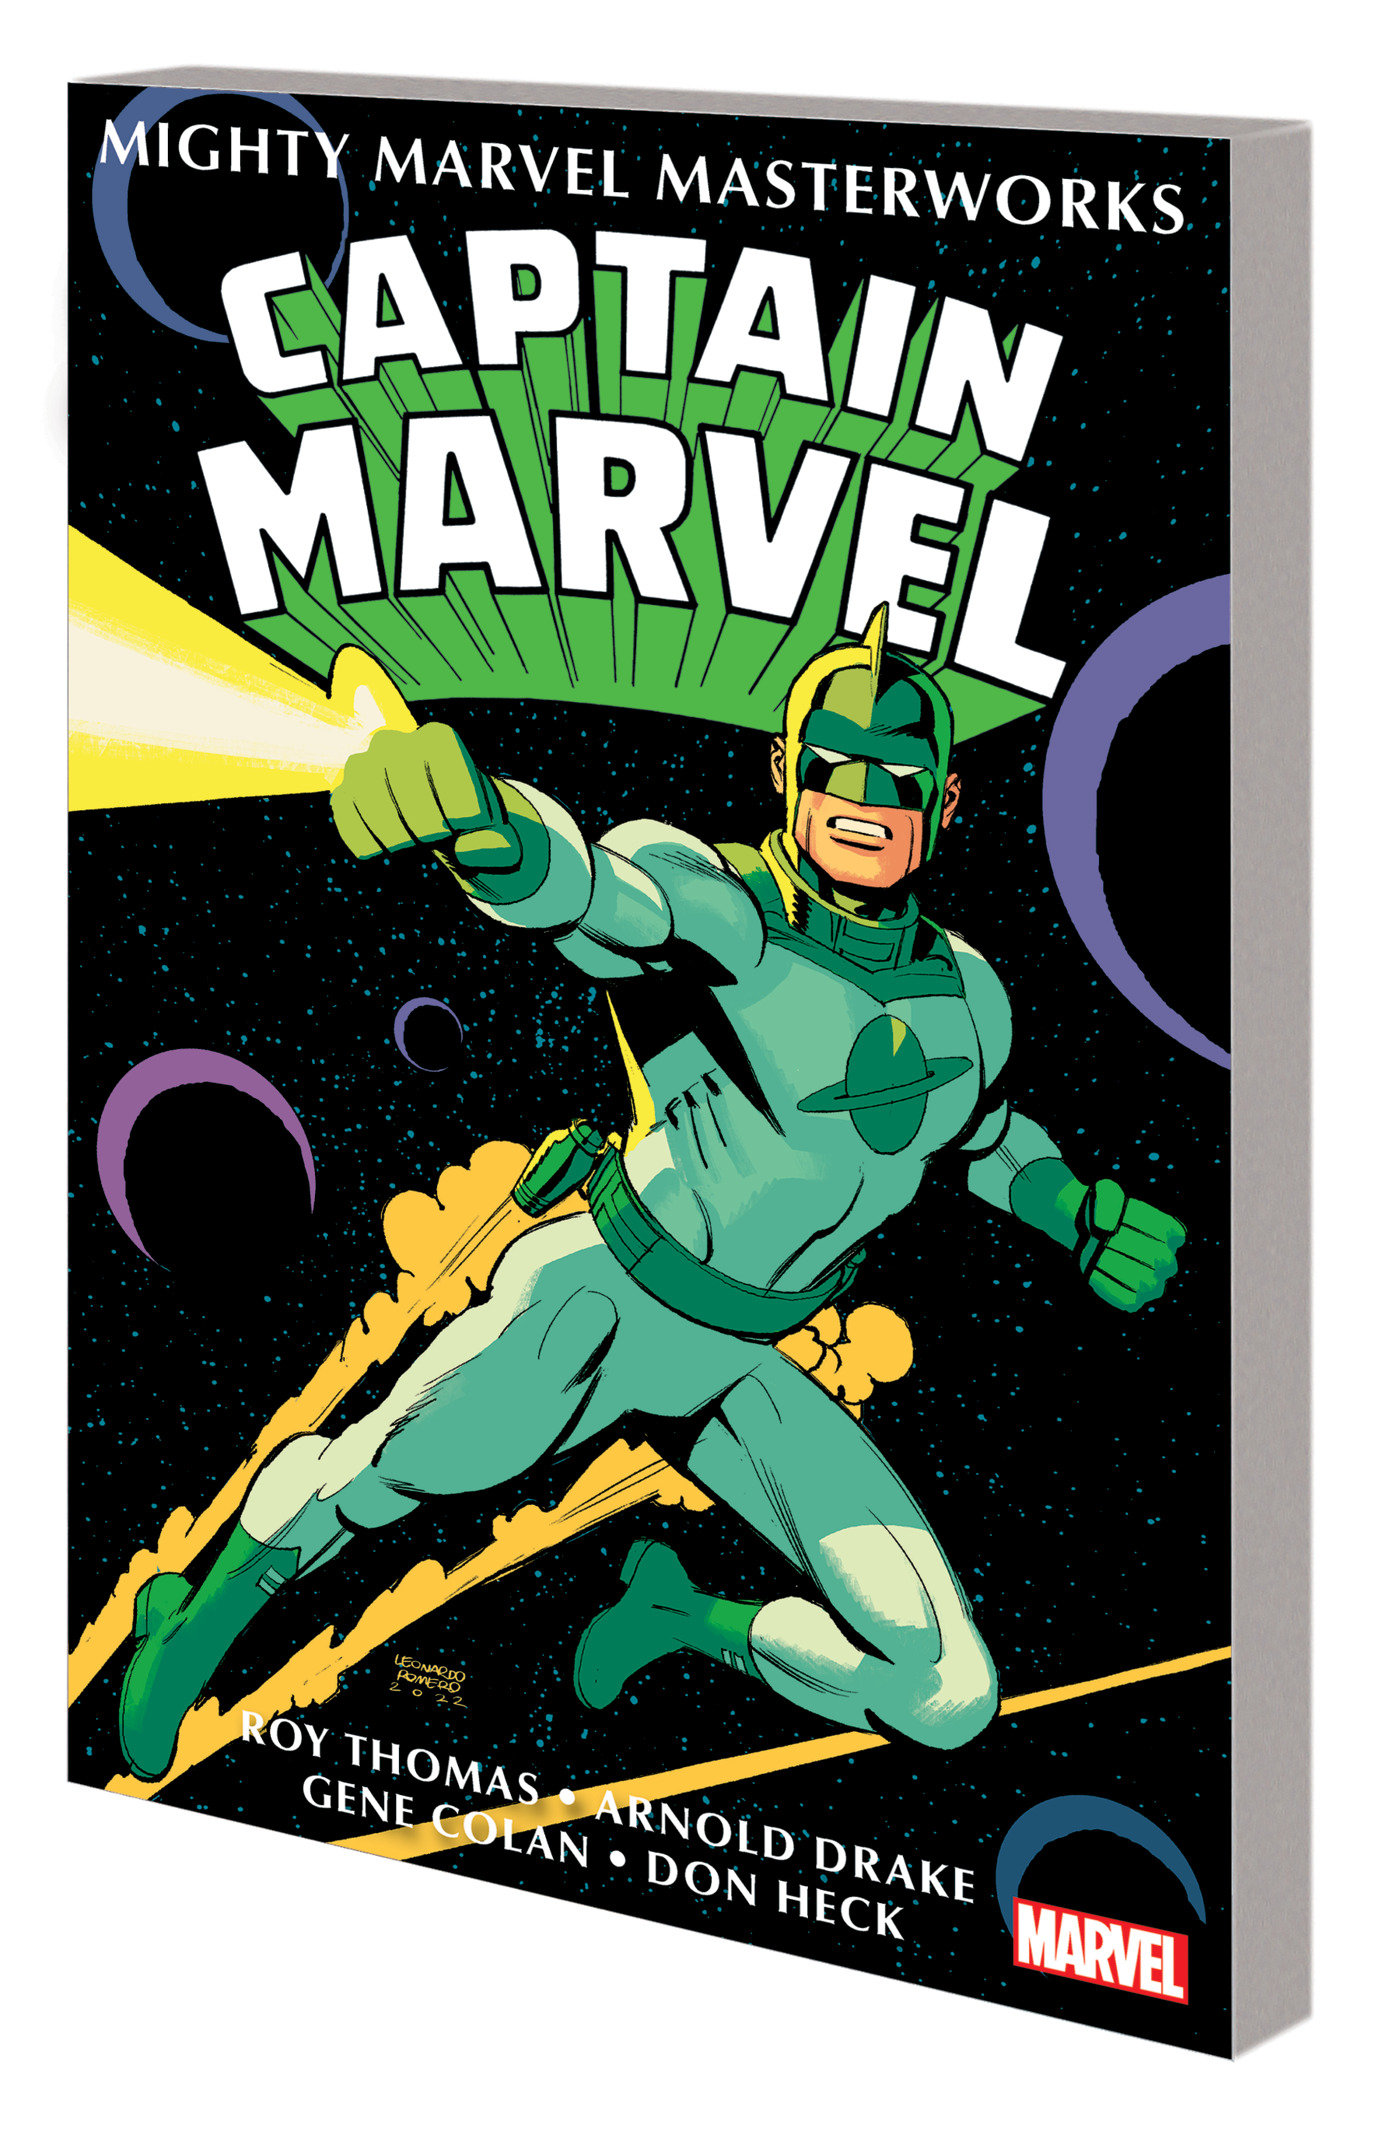 Mighty Marvel Masterworks Captain Marvel Graphic Novel Volume 1 Coming of Captain Marvel